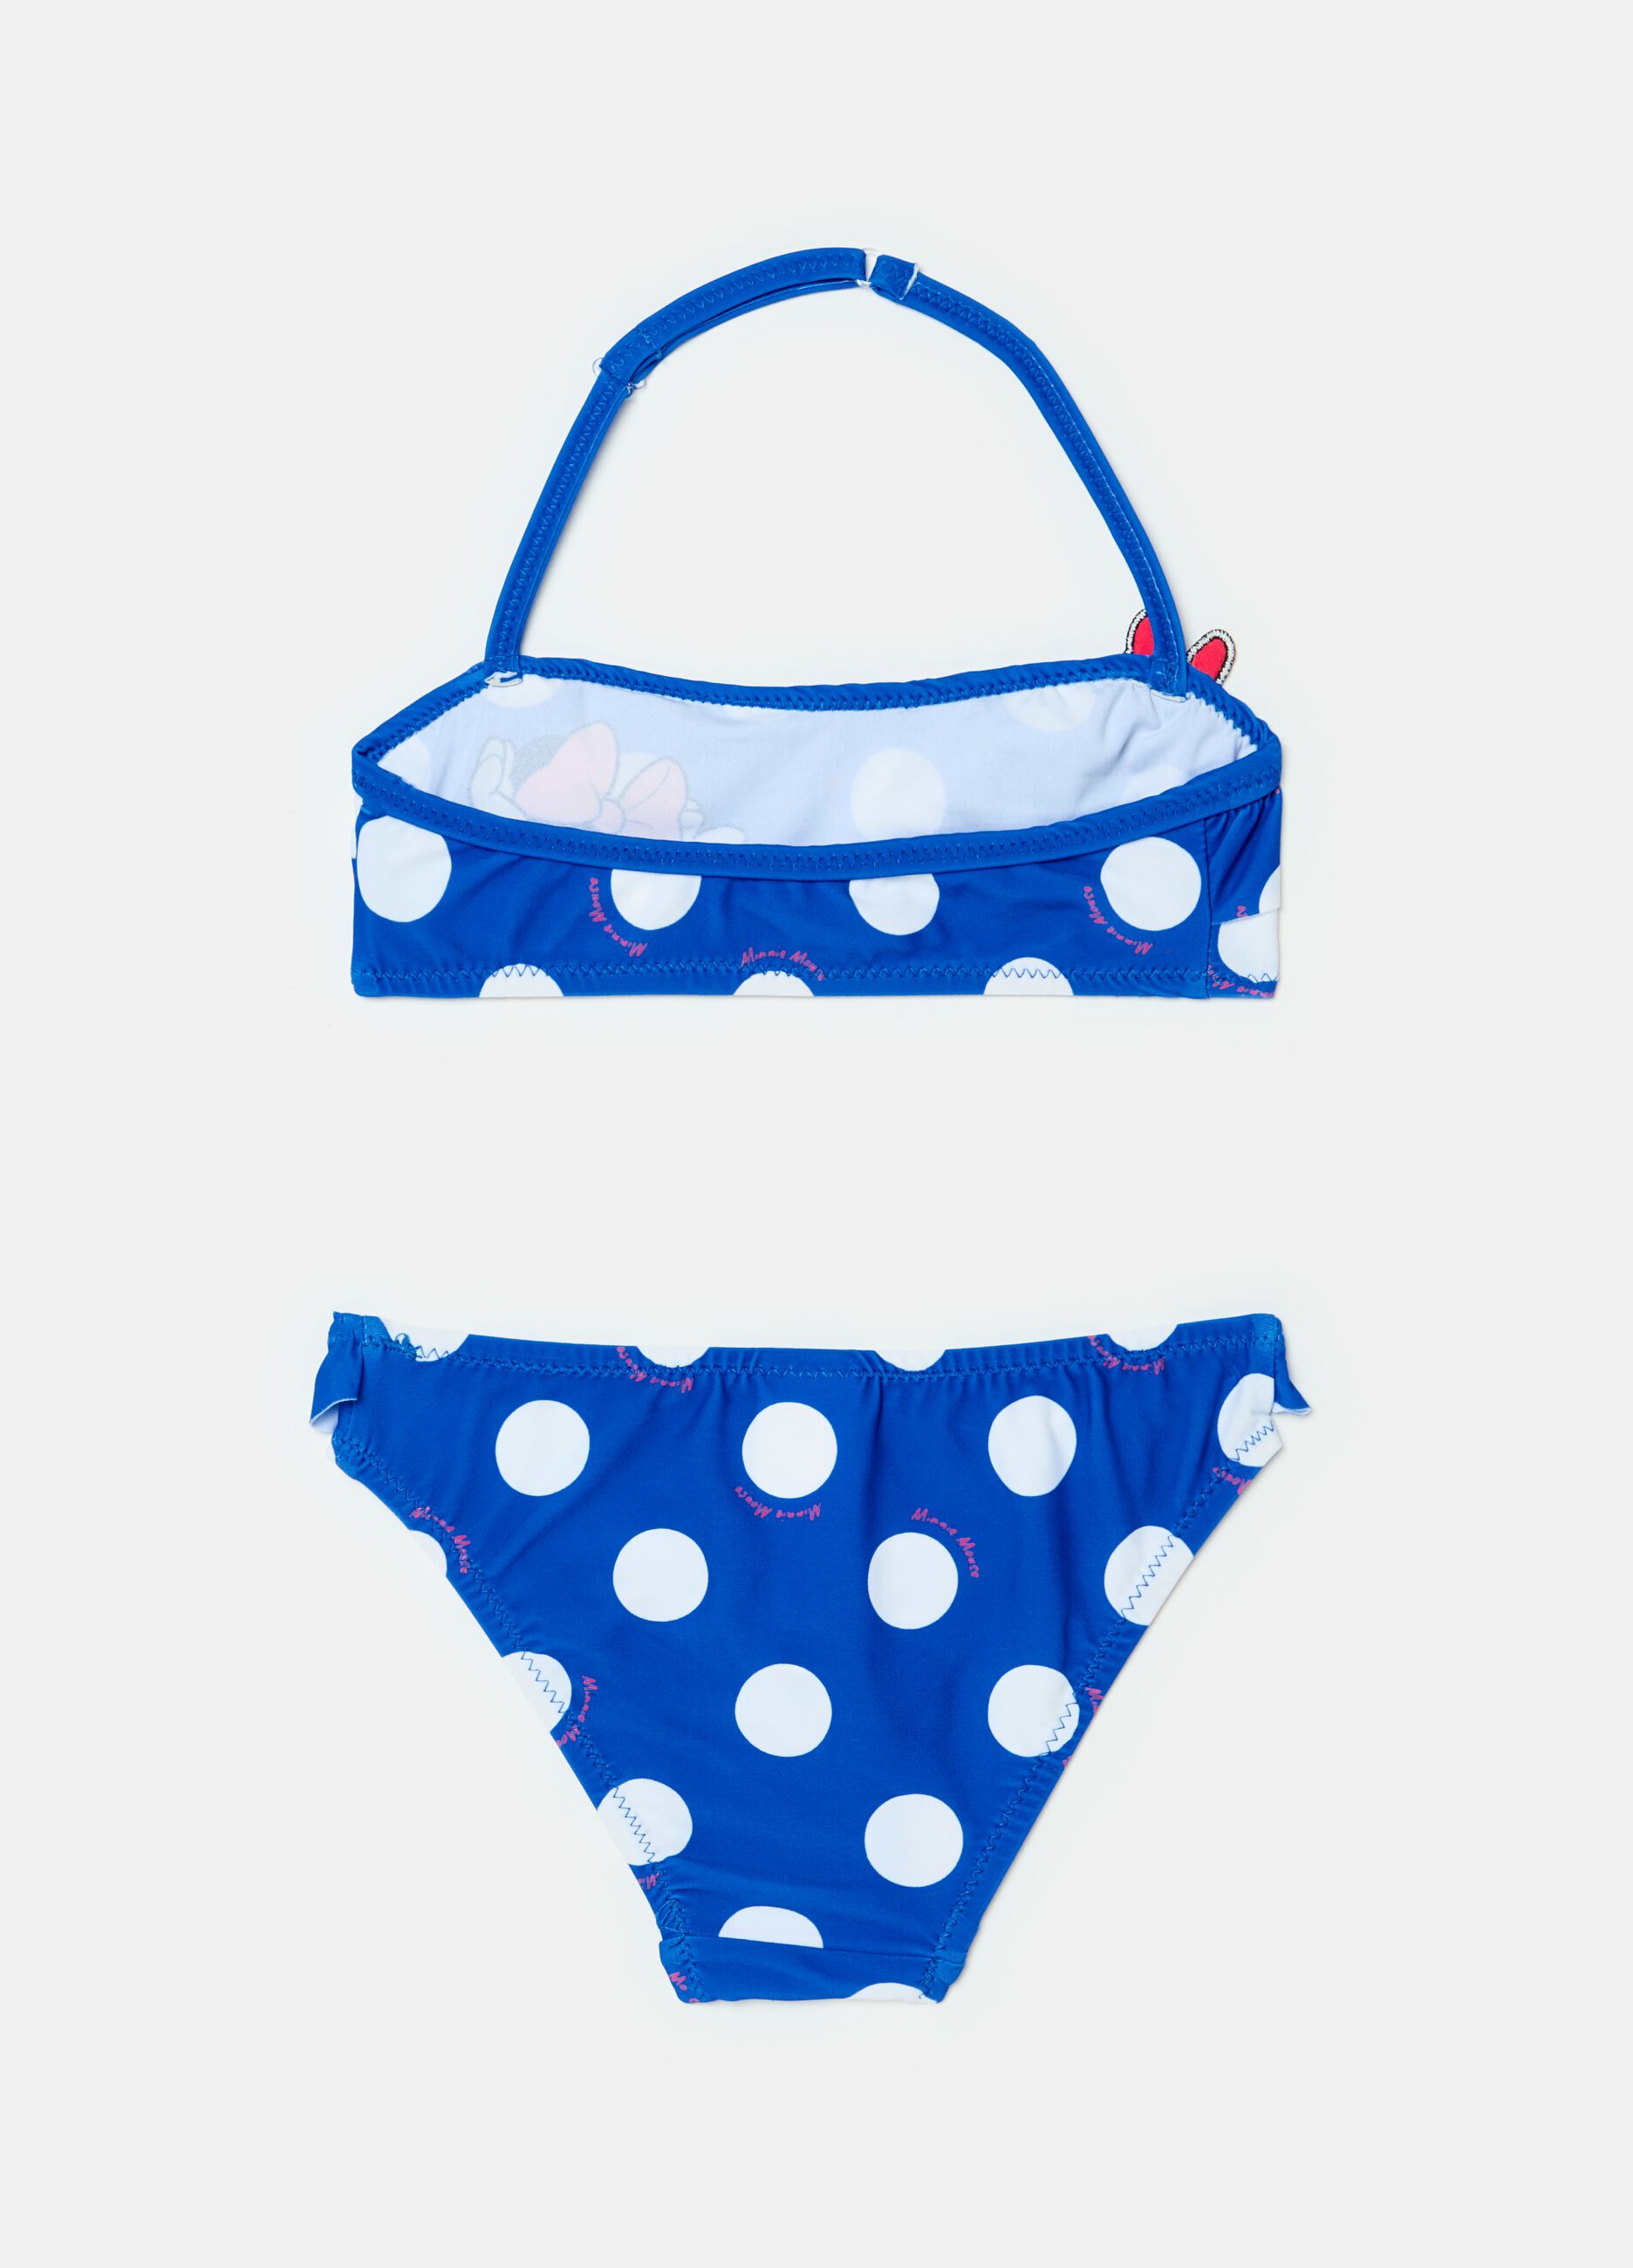 Bikini with polka dots pattern and Minnie Mouse print